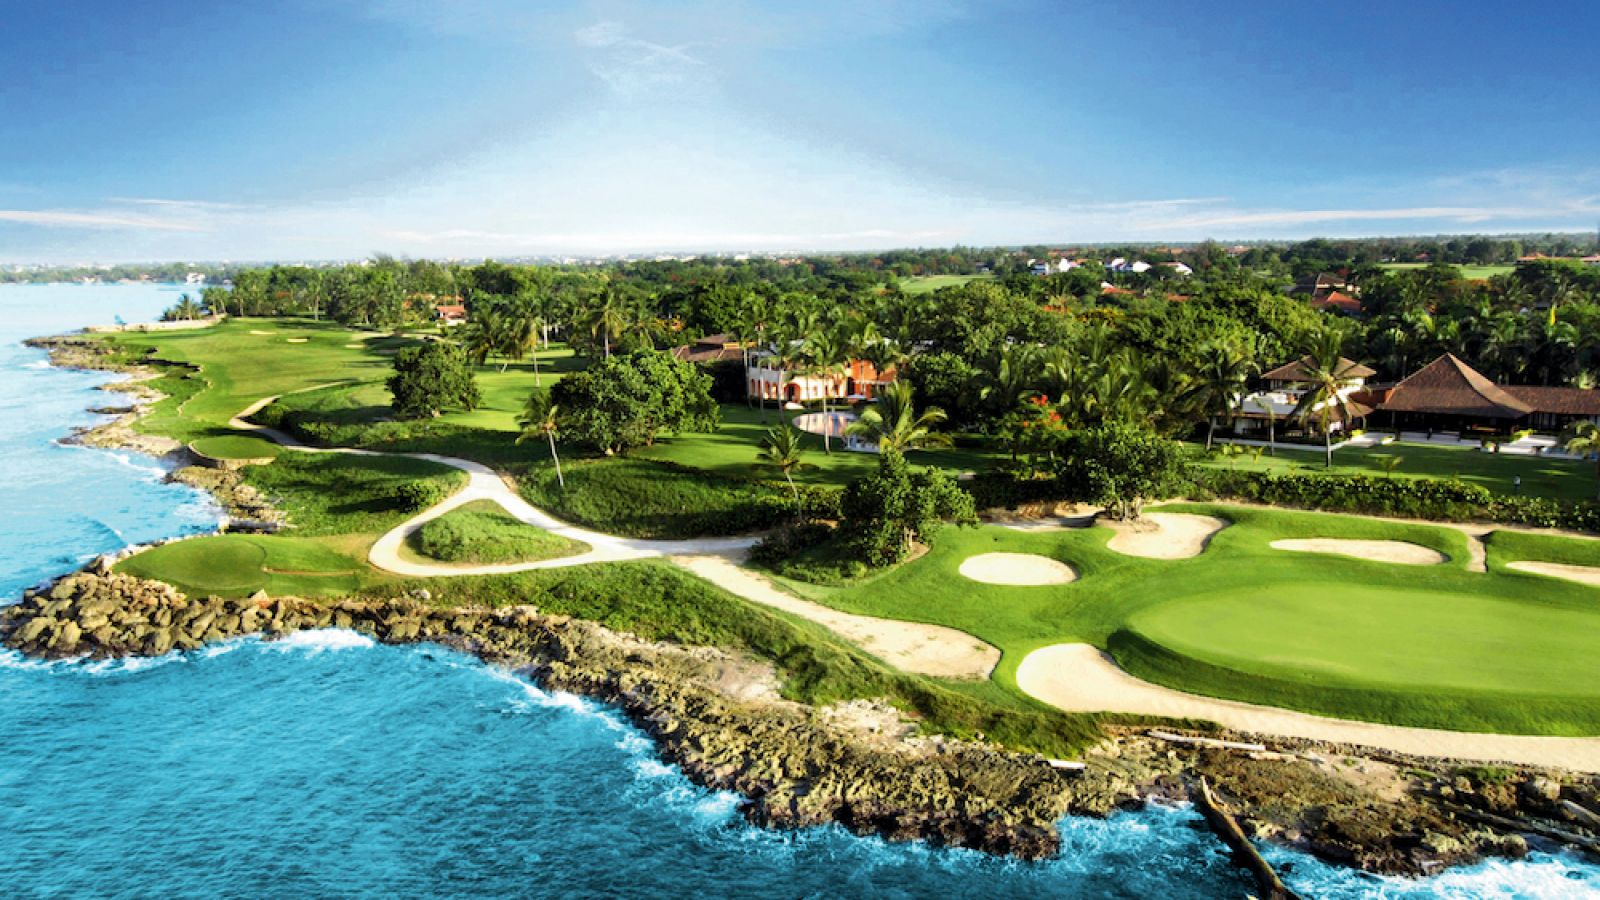 Casa de Campo - Dominican Republic golf packages